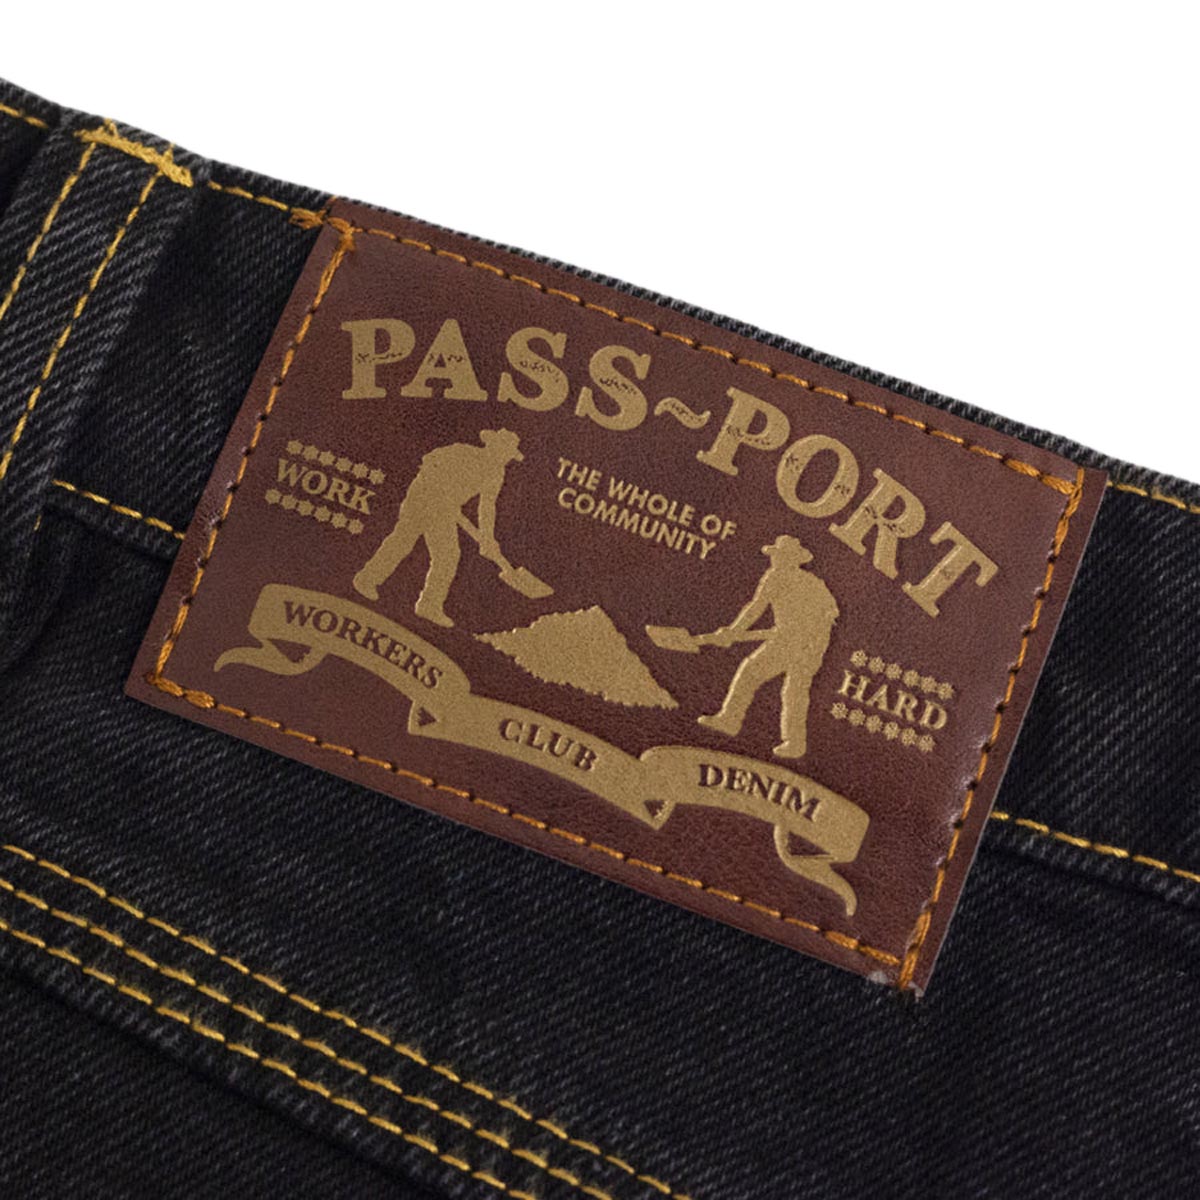 Passport Workers Club Denim Jeans - Washed Black image 4